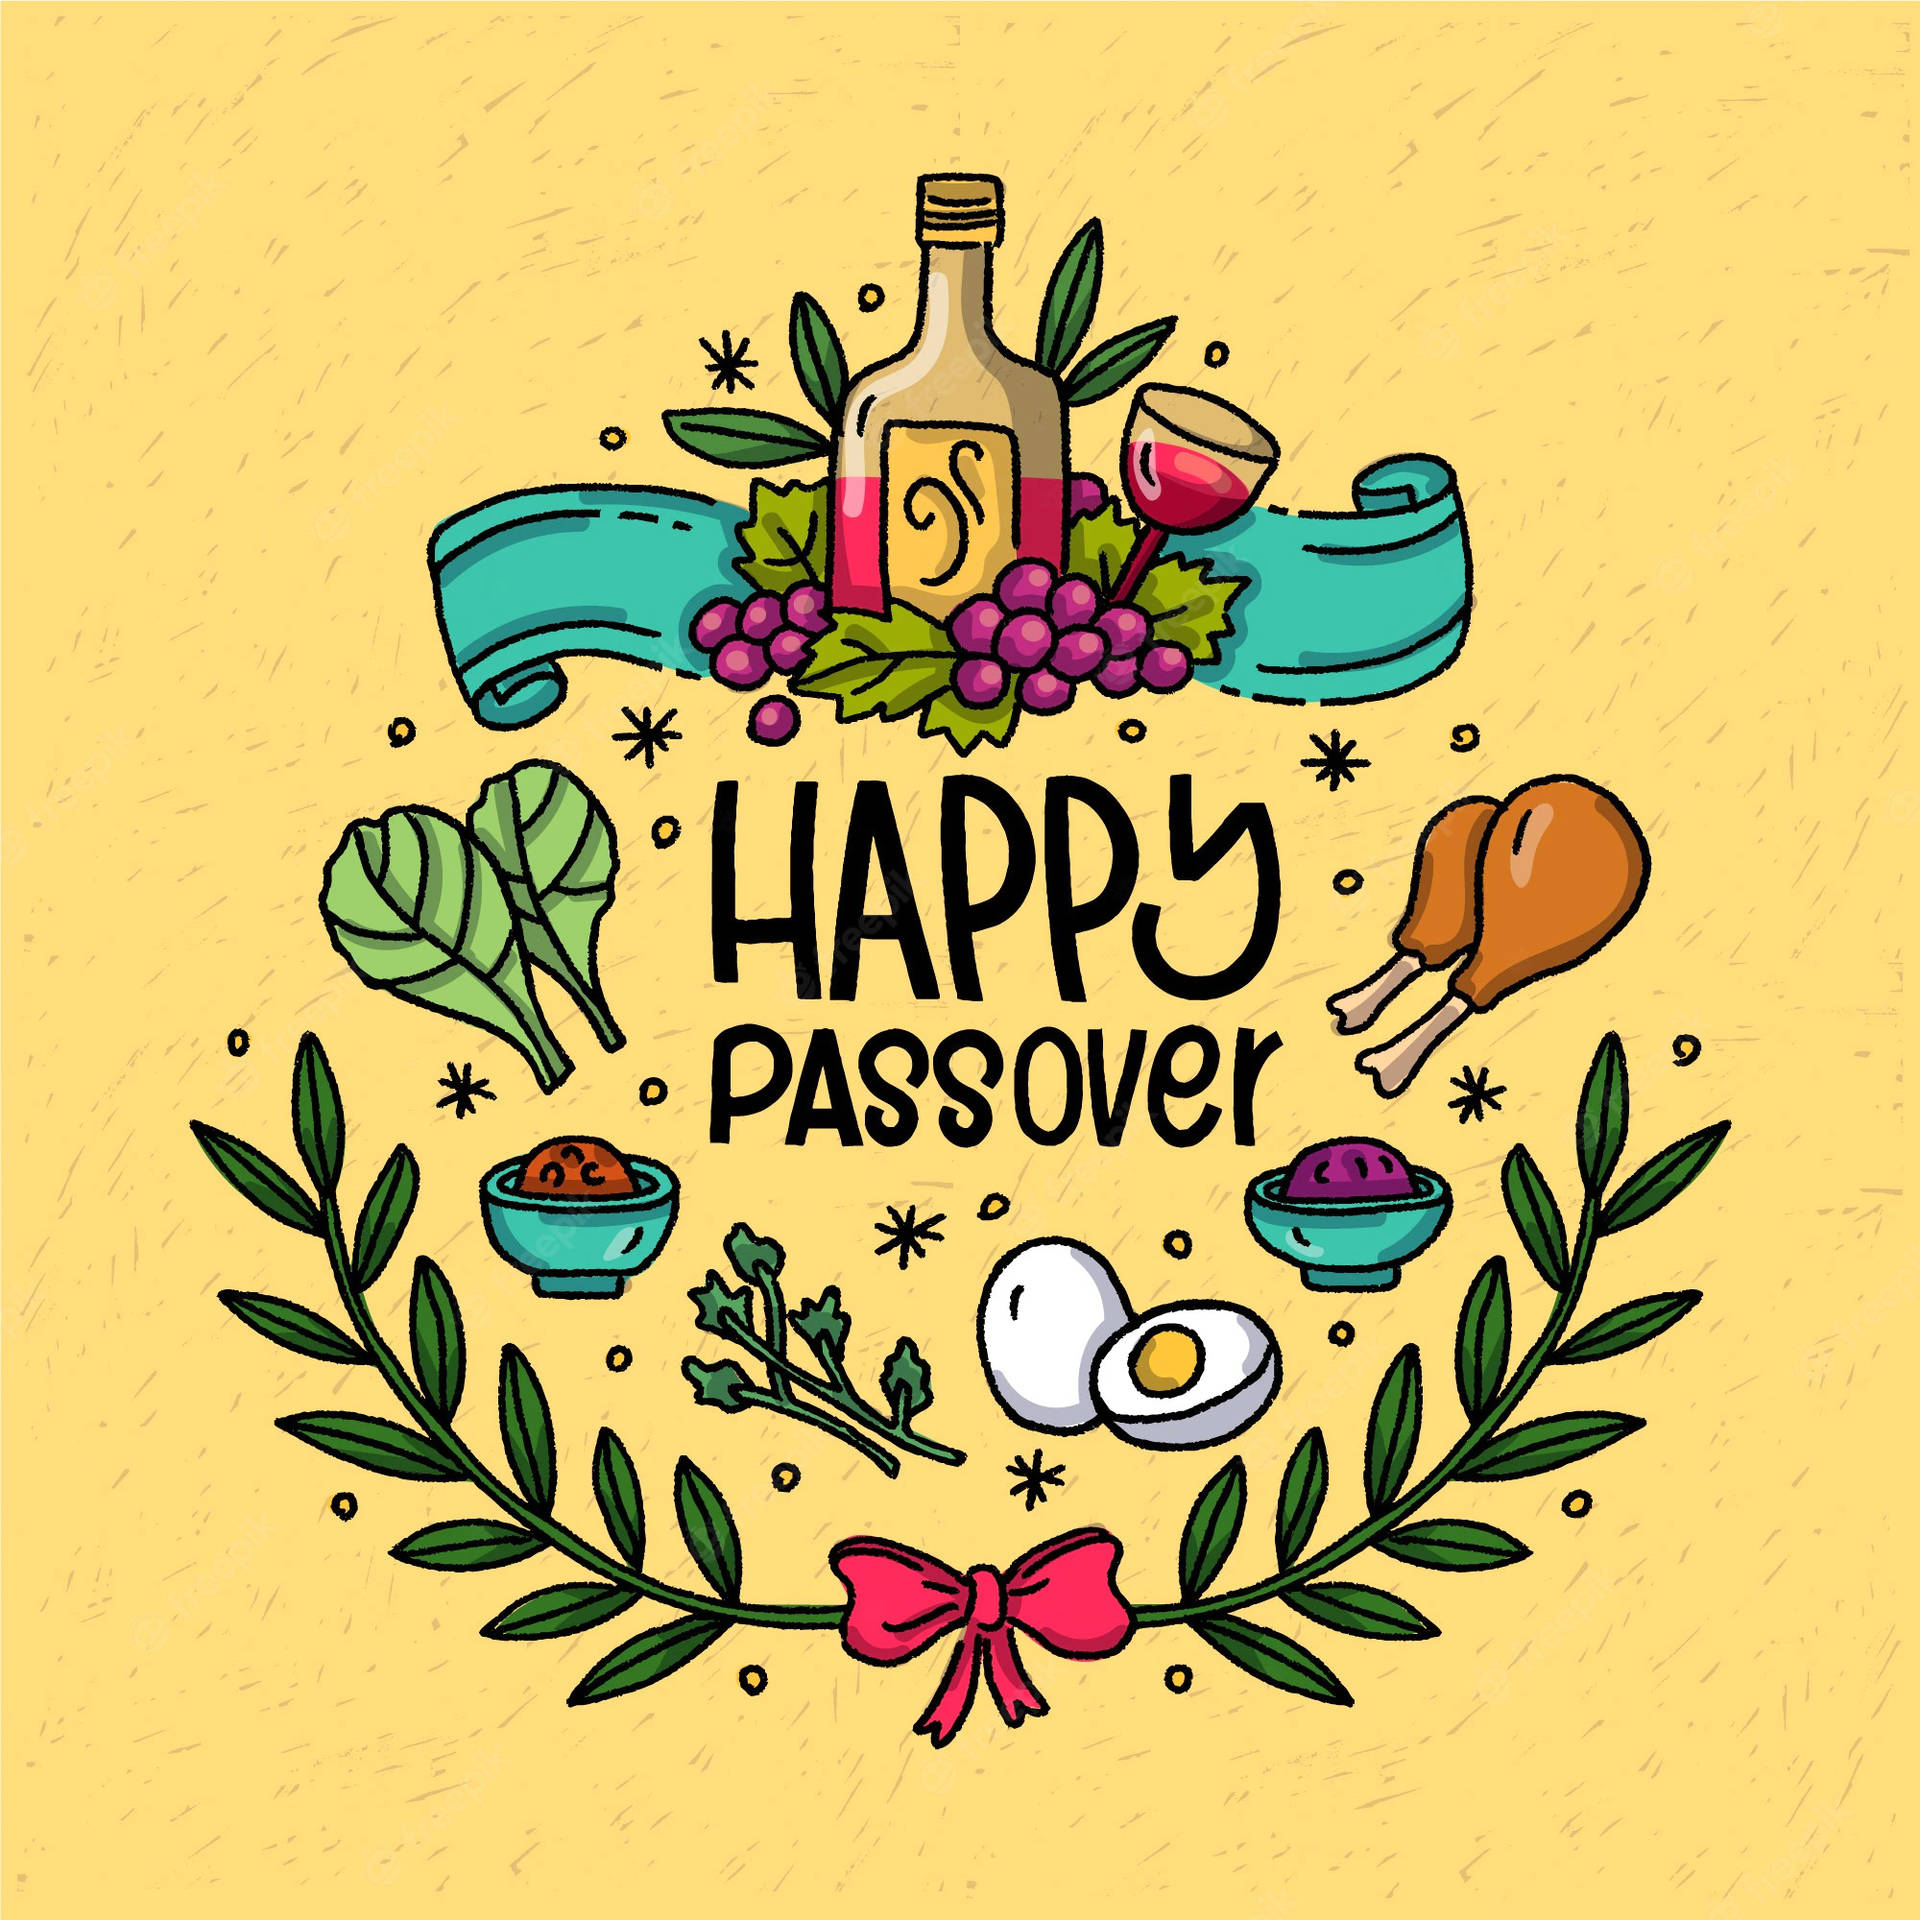 Passover Digital Art Background